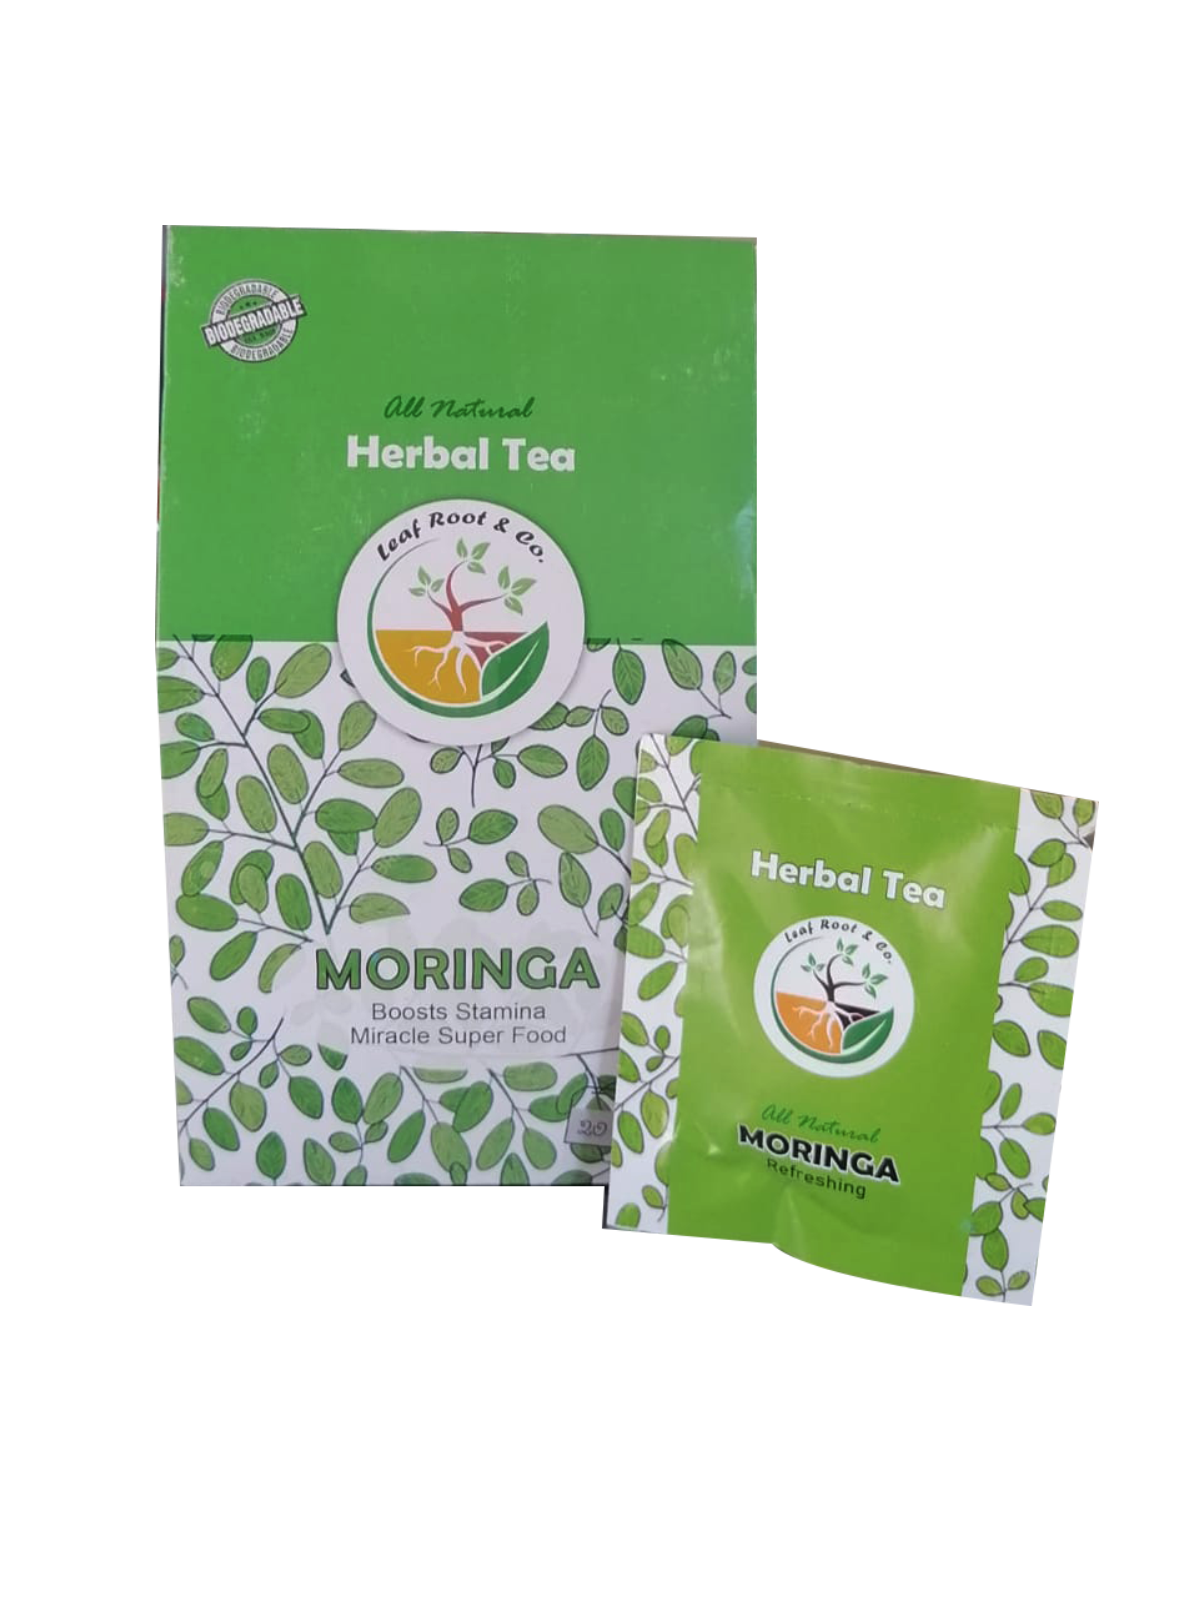 Moringa Tea By: Leaf Root & Co.